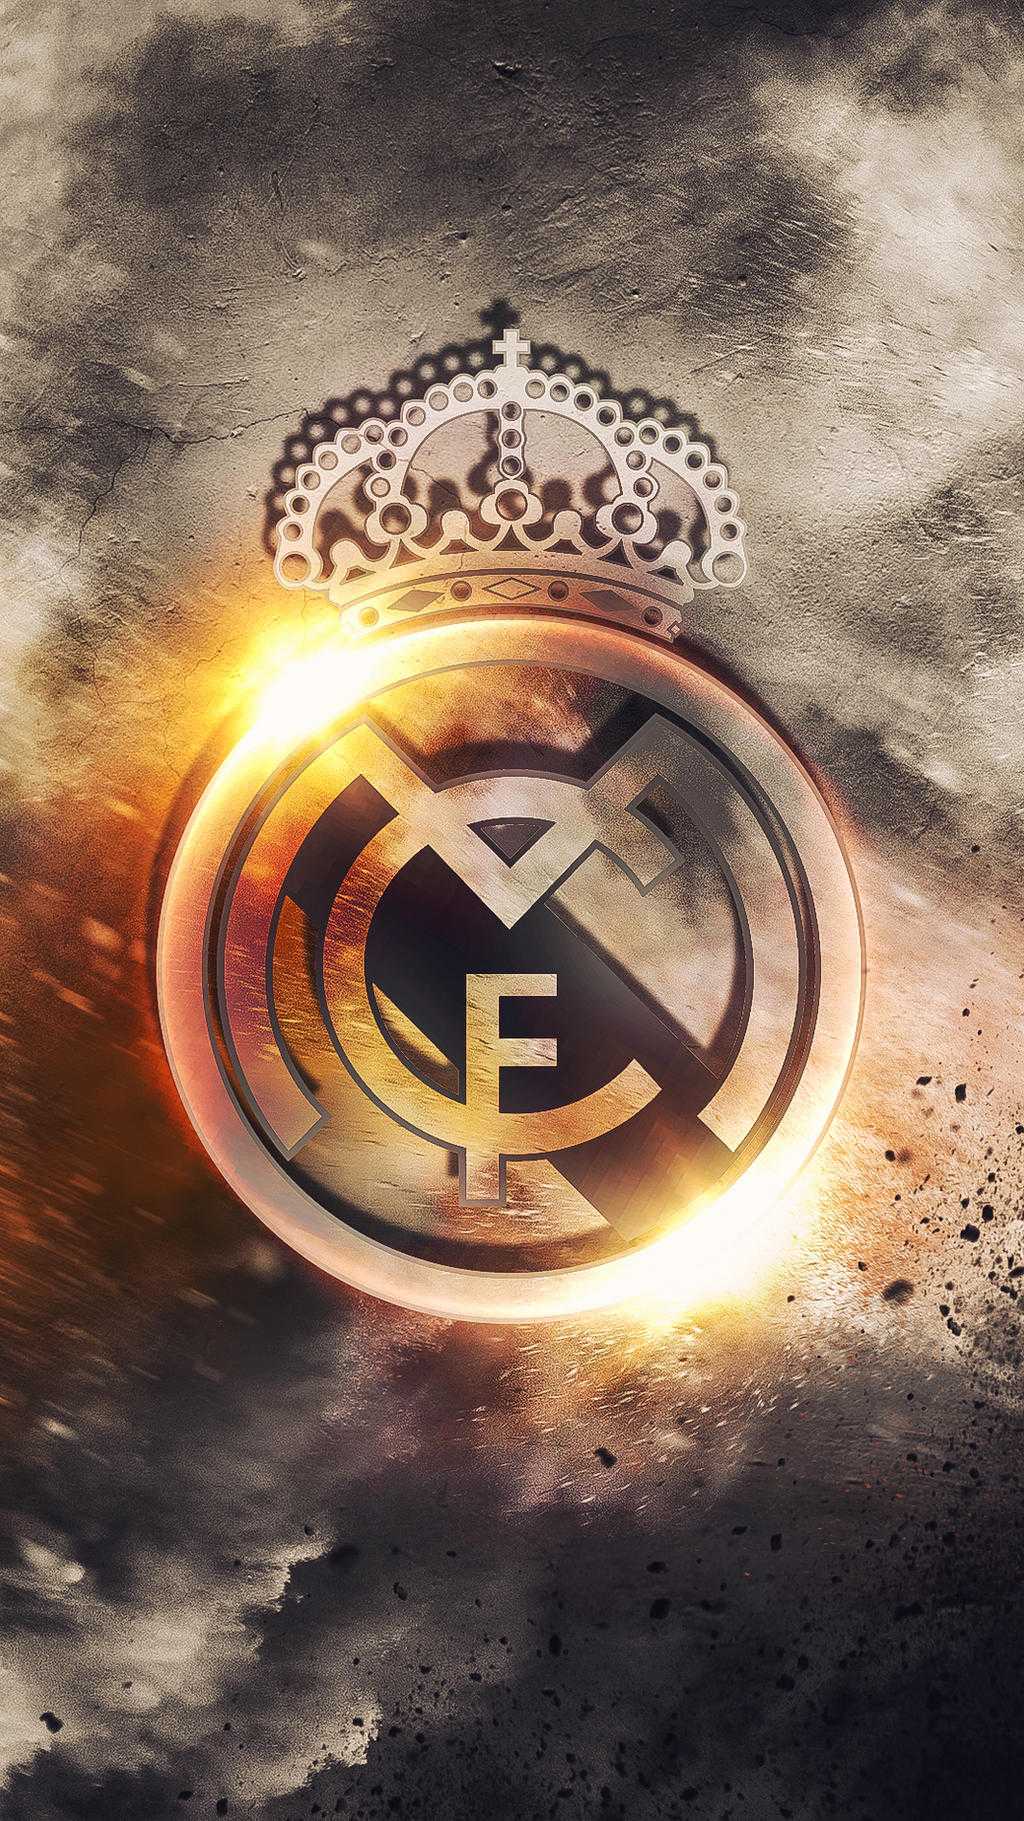 Real Madrid Wallpaper - NawPic